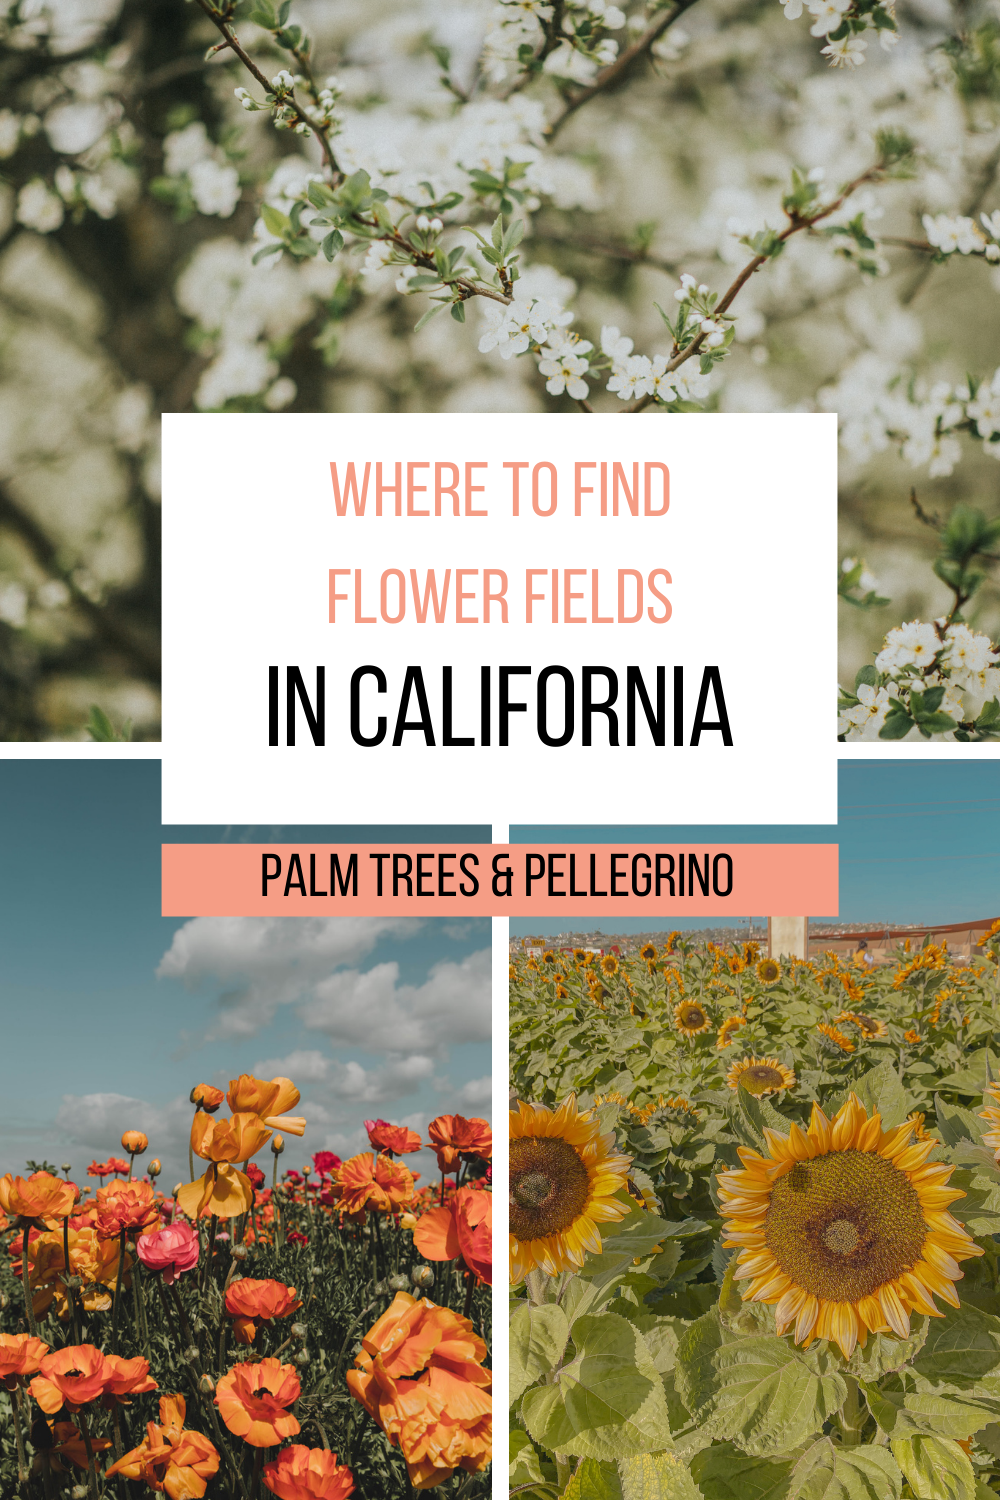 The best flower fields in California - Palm Trees & Pellegrino California travel tips